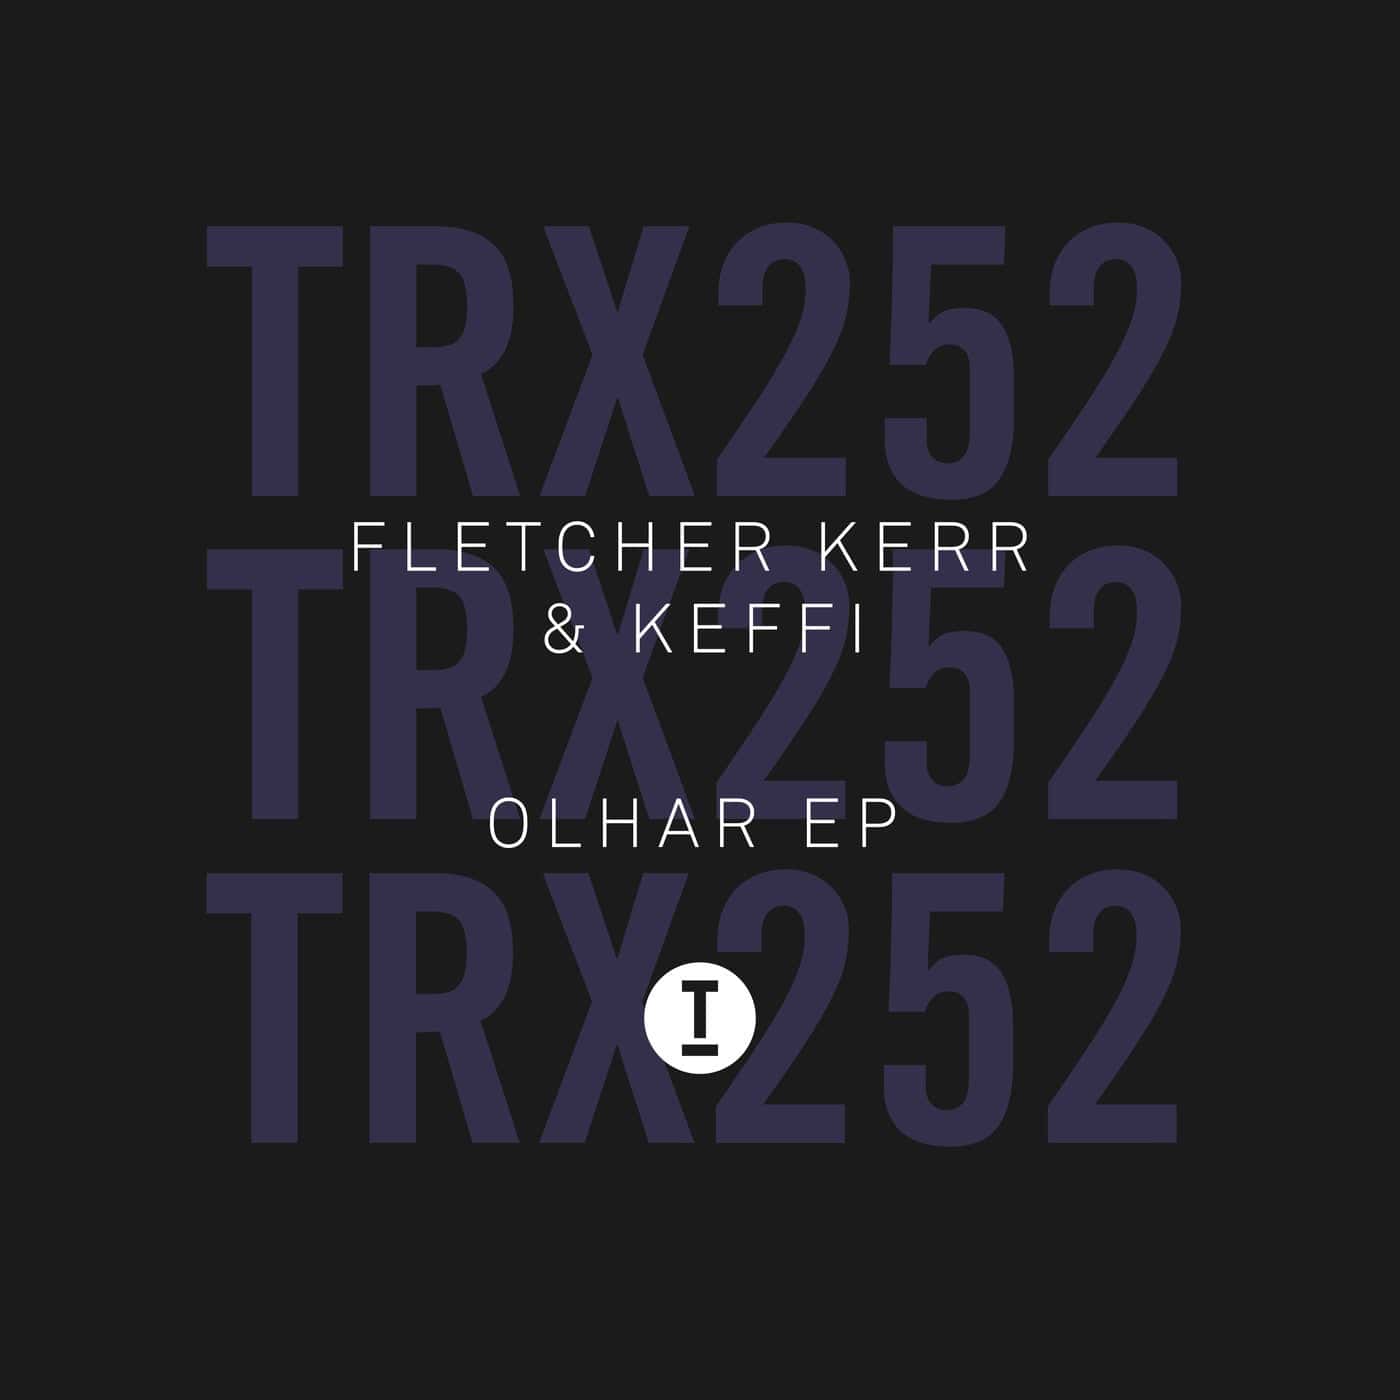 image cover: Fletcher Kerr, KEFFI - Olhar EP / TRX25201Z